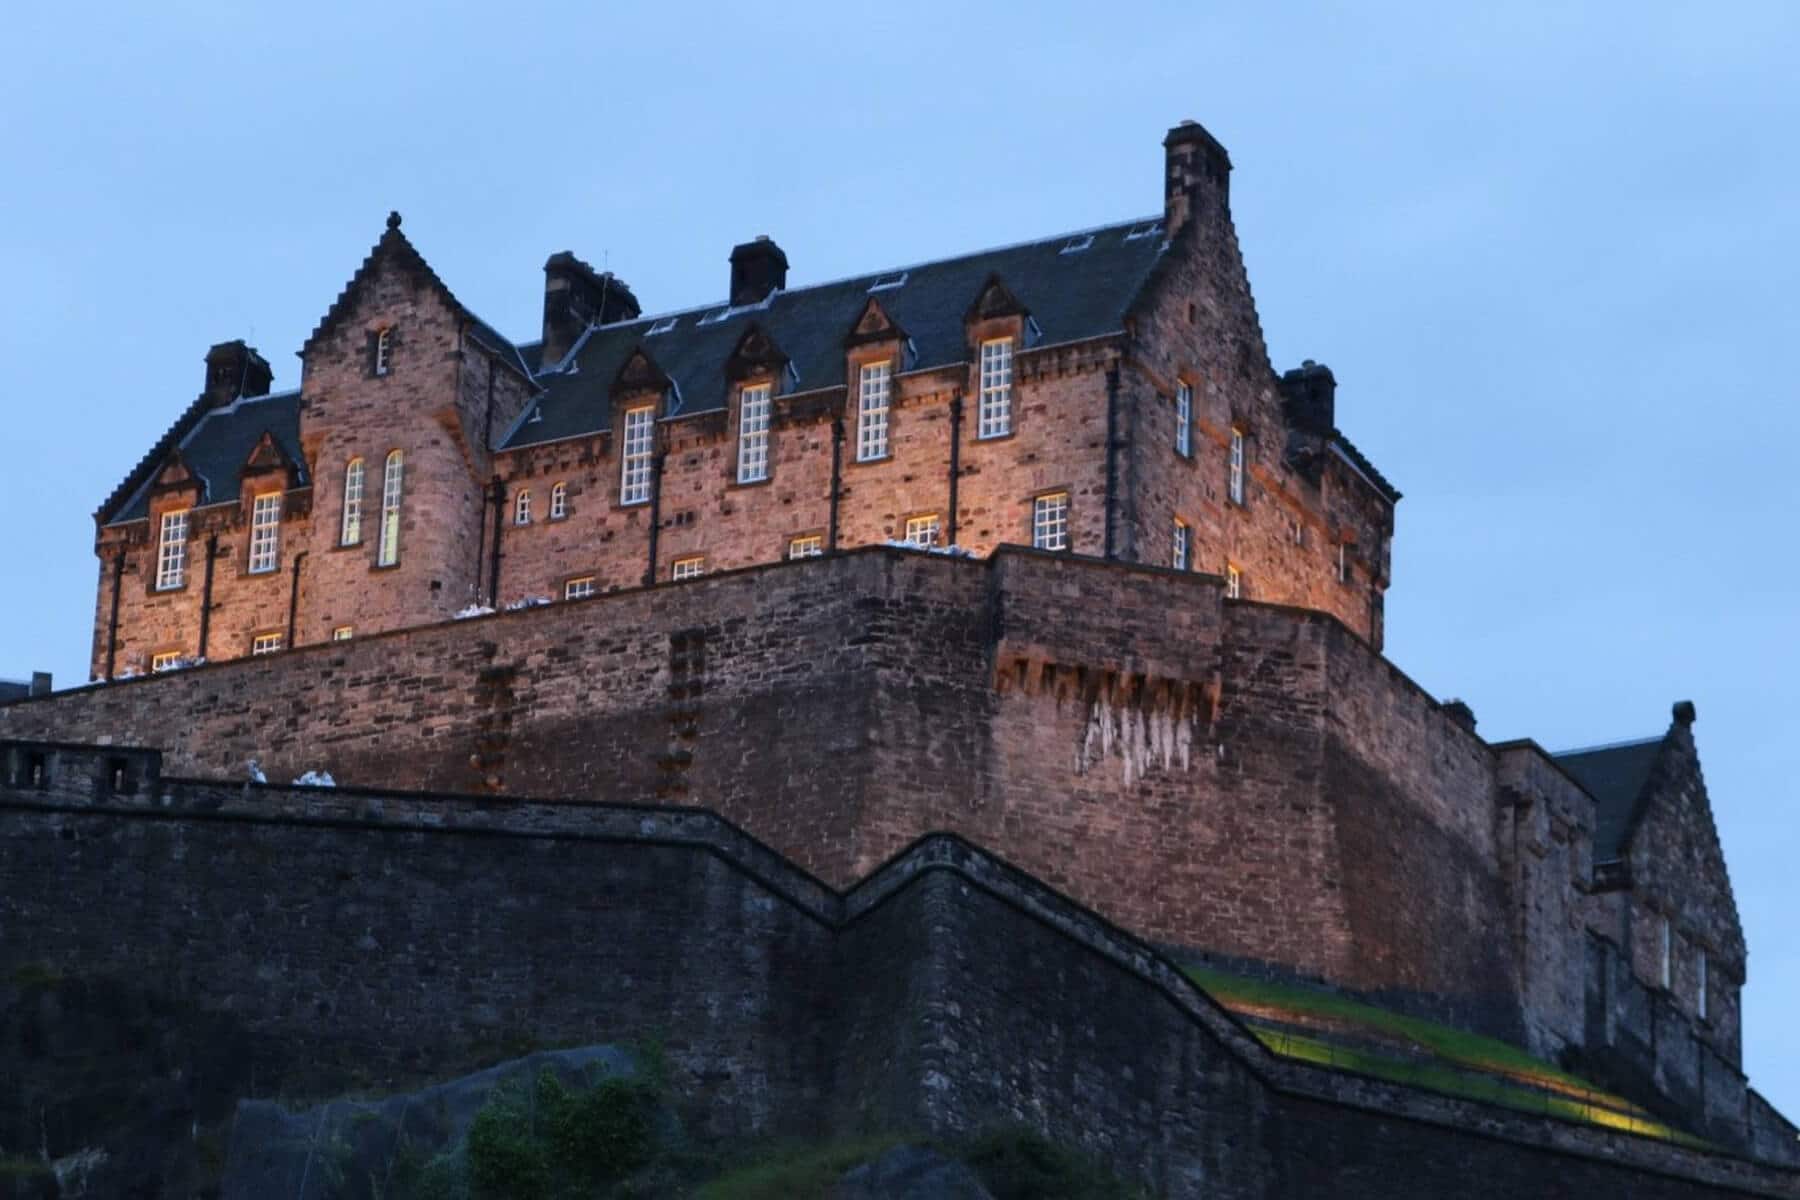 A photo of Edinburgh Castle in the gathering twilight